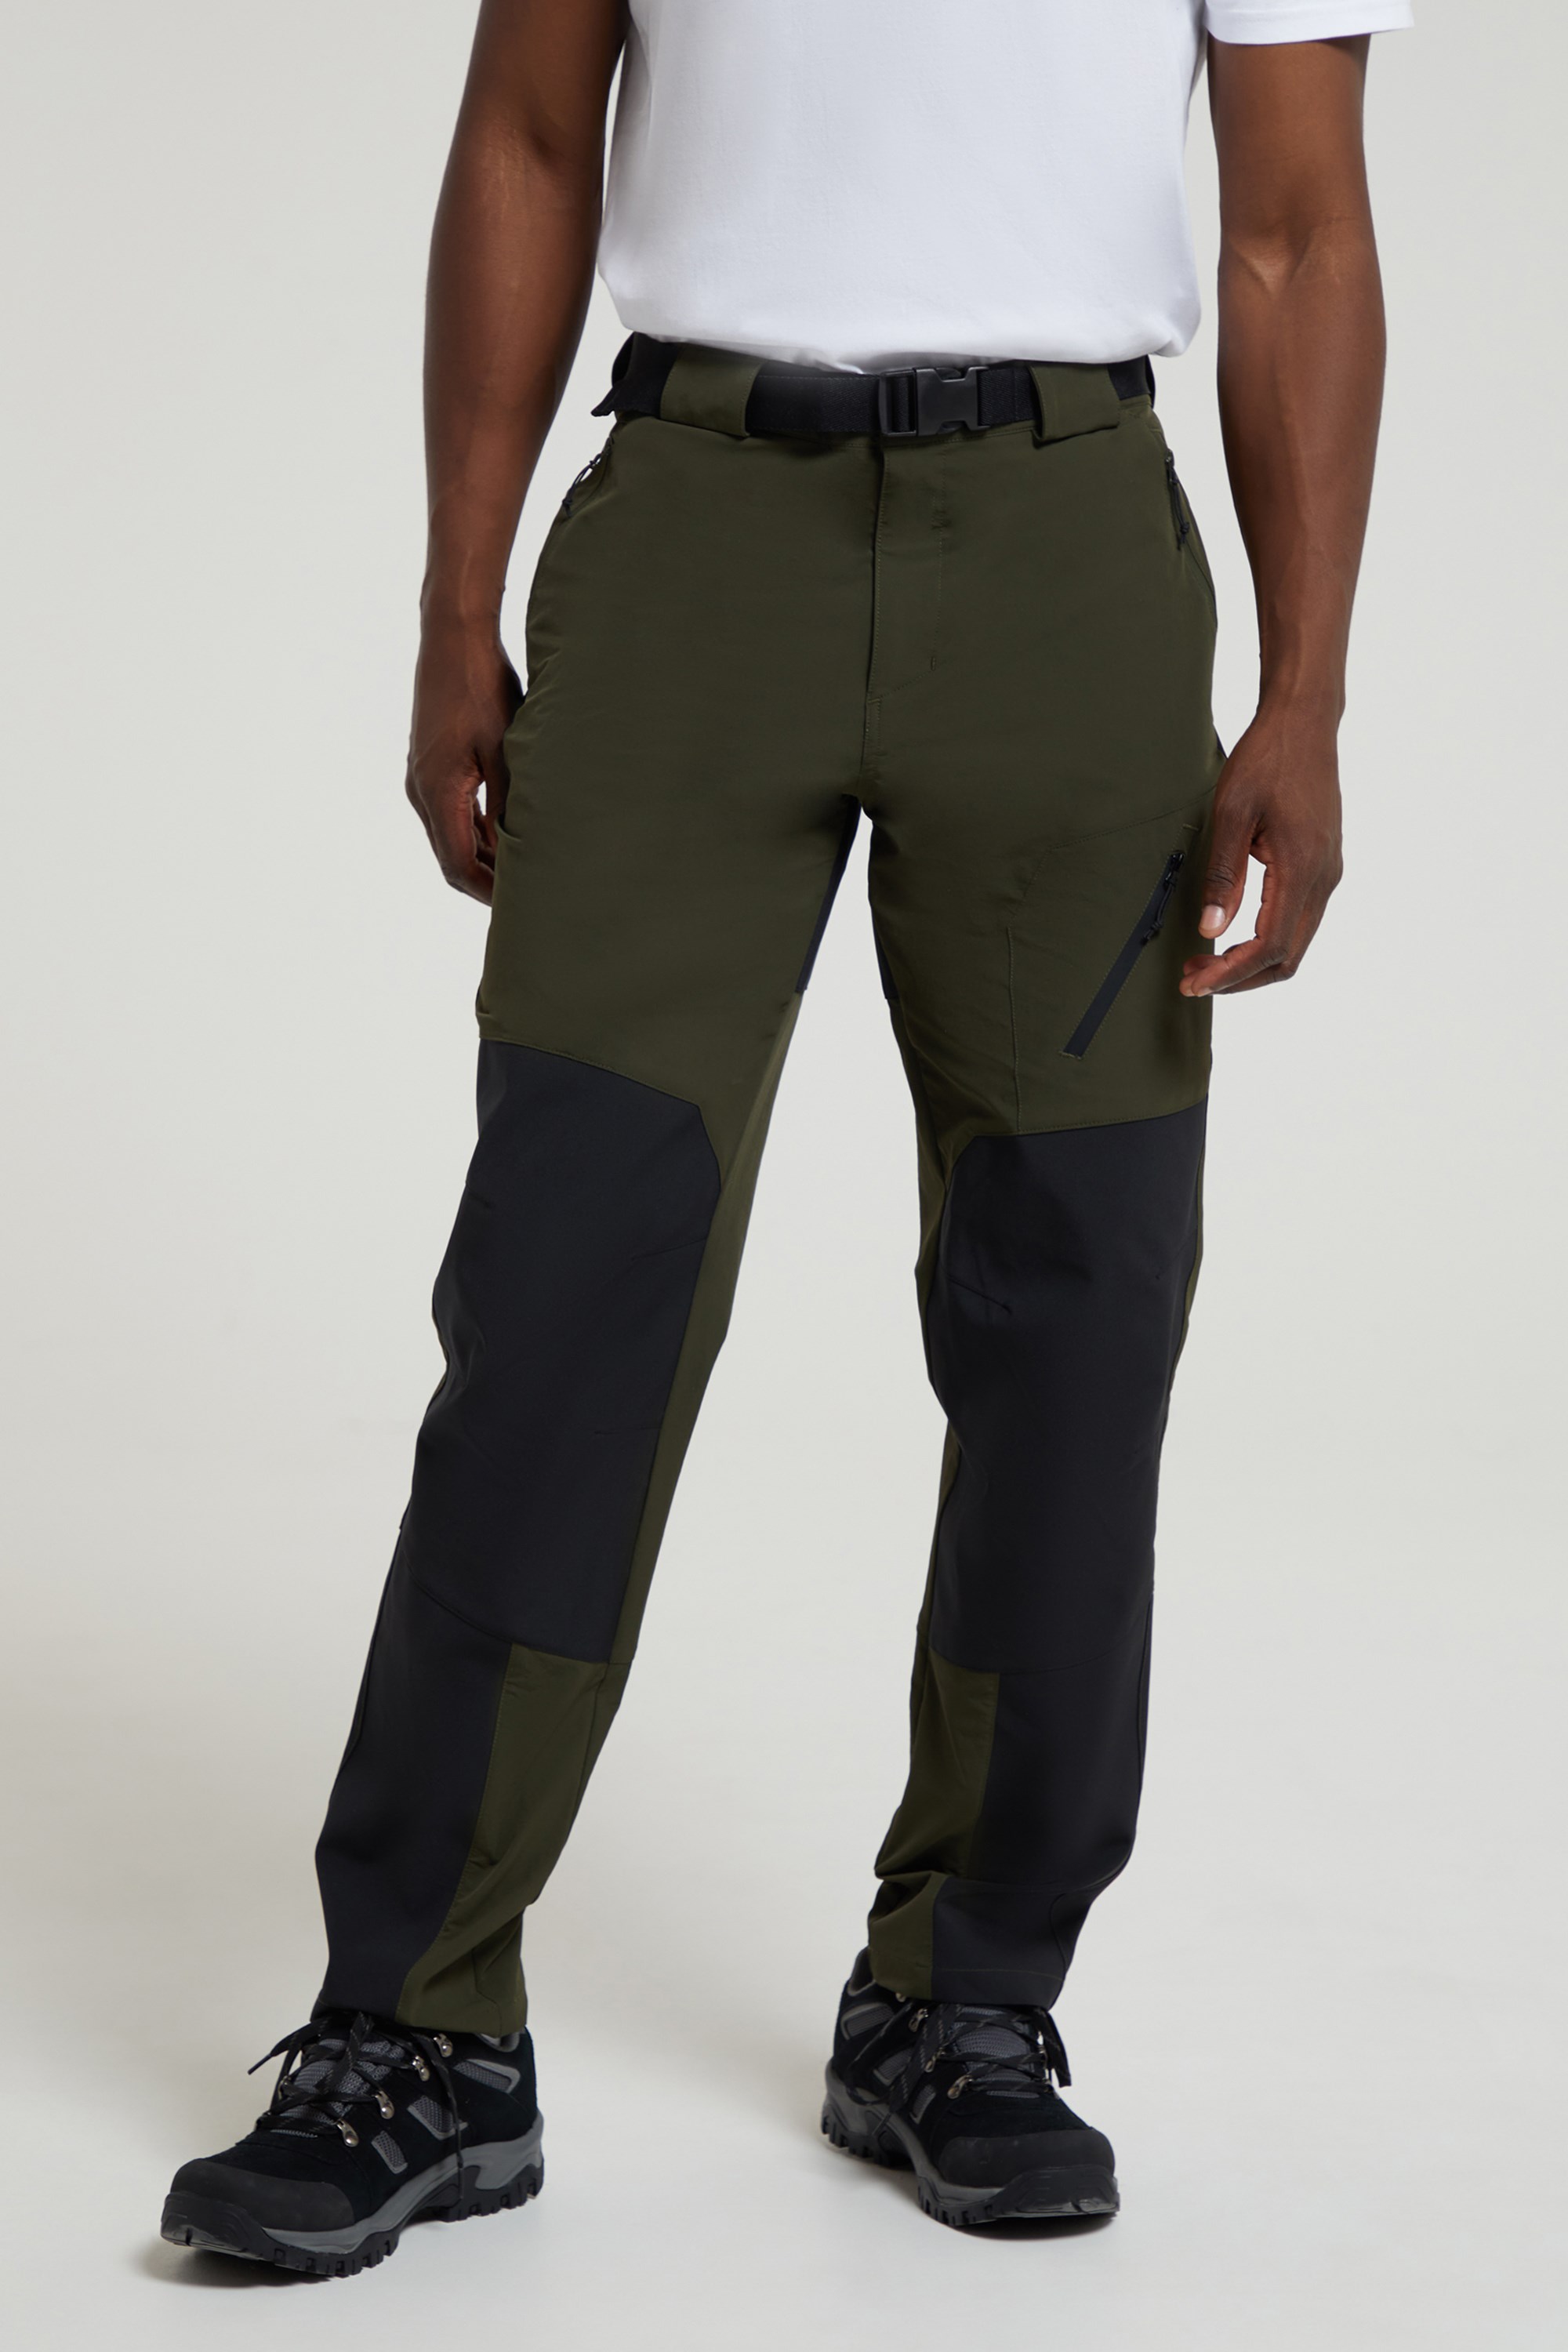 Mountain Warehouse walking trousers navy Size: 14 | Oxfam Shop